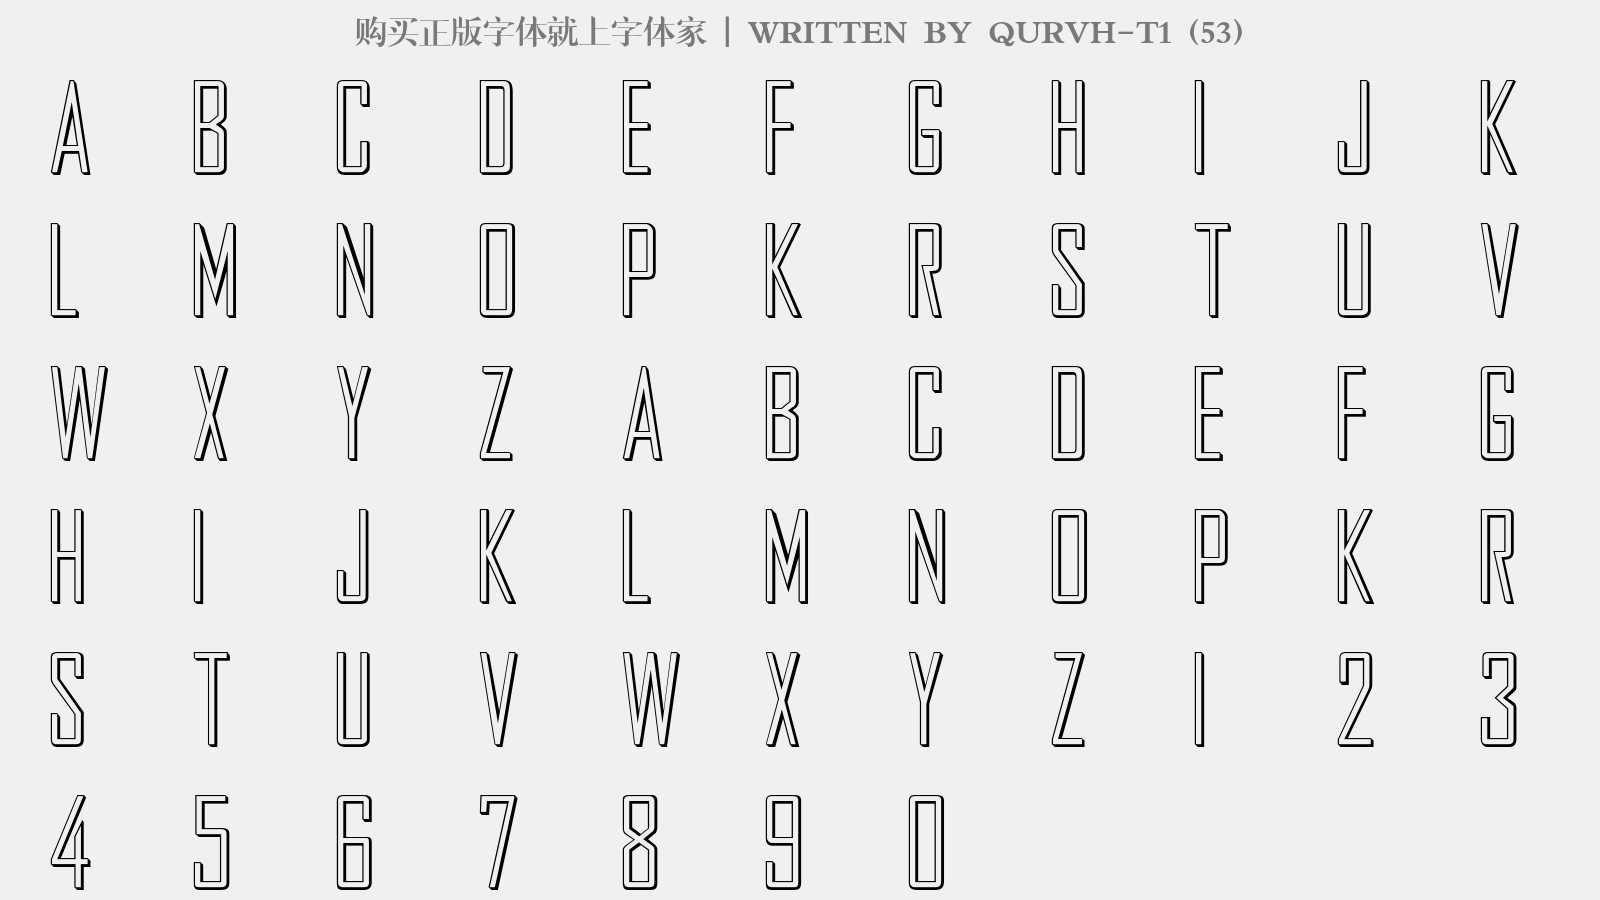 QURVH-T1 (53) - 大写字母/小写字母/数字